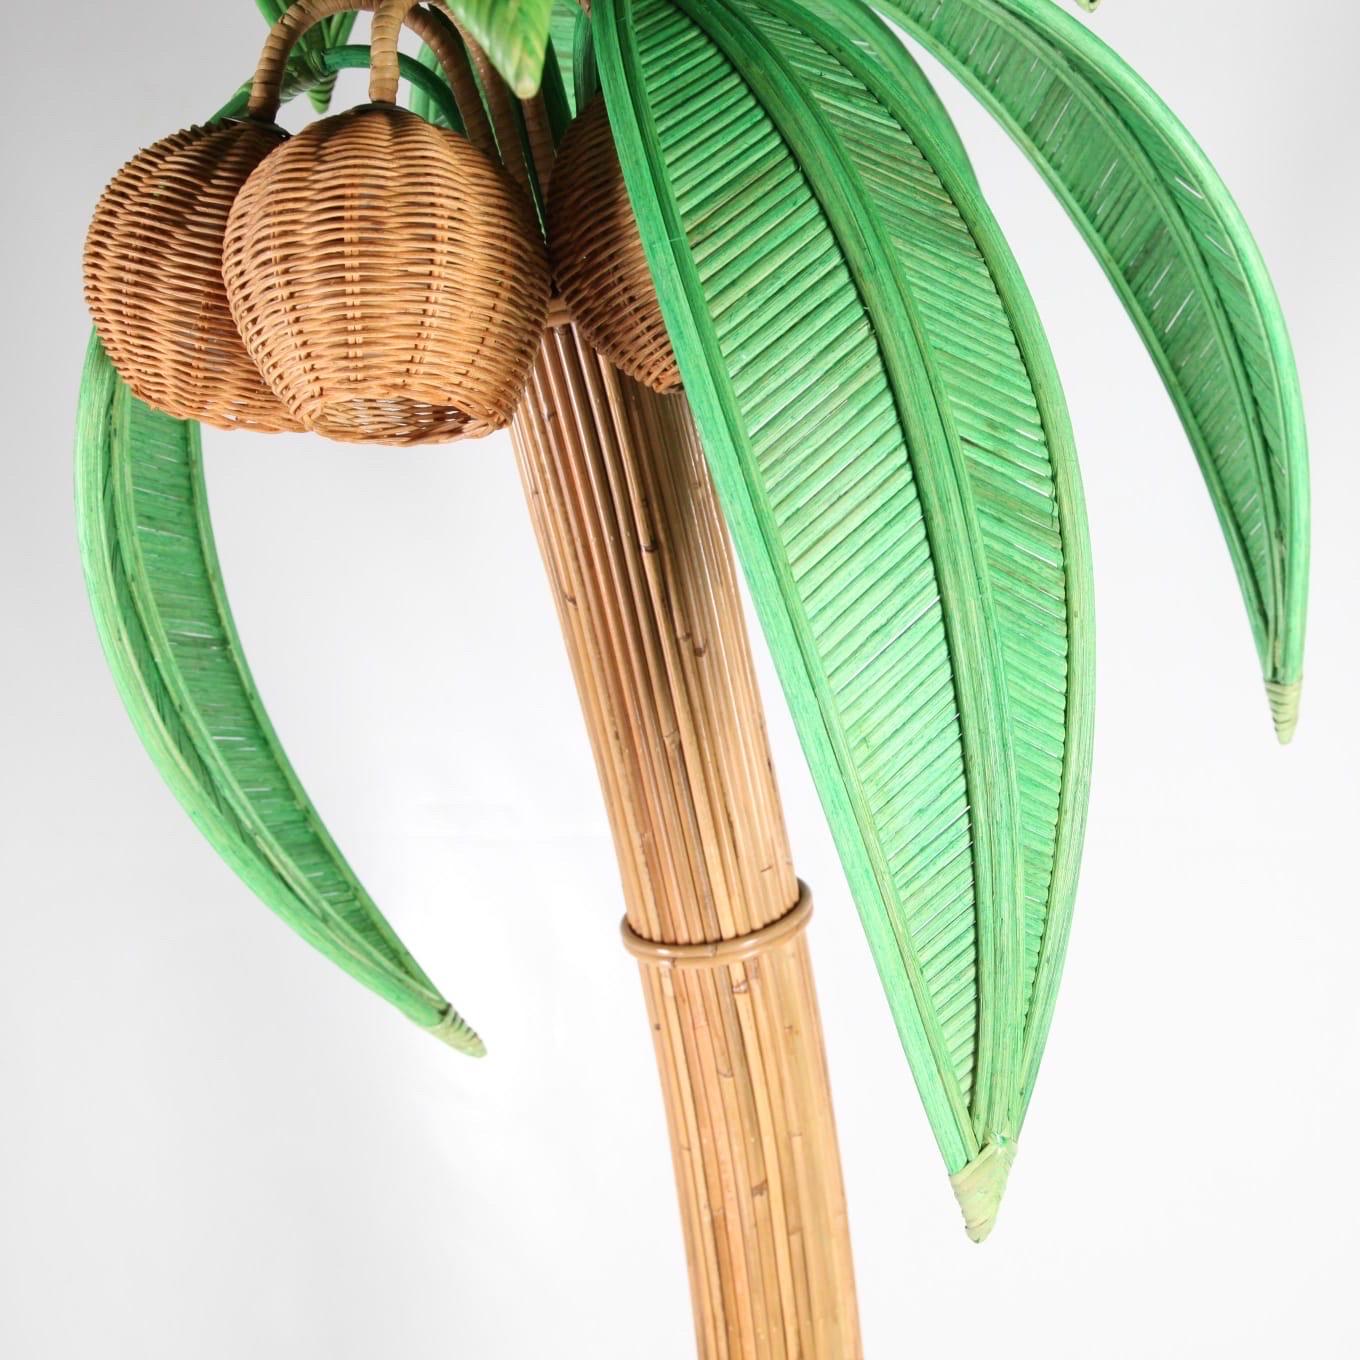 Rattan « coconut tree/palm tree » floor lamp For Sale 1